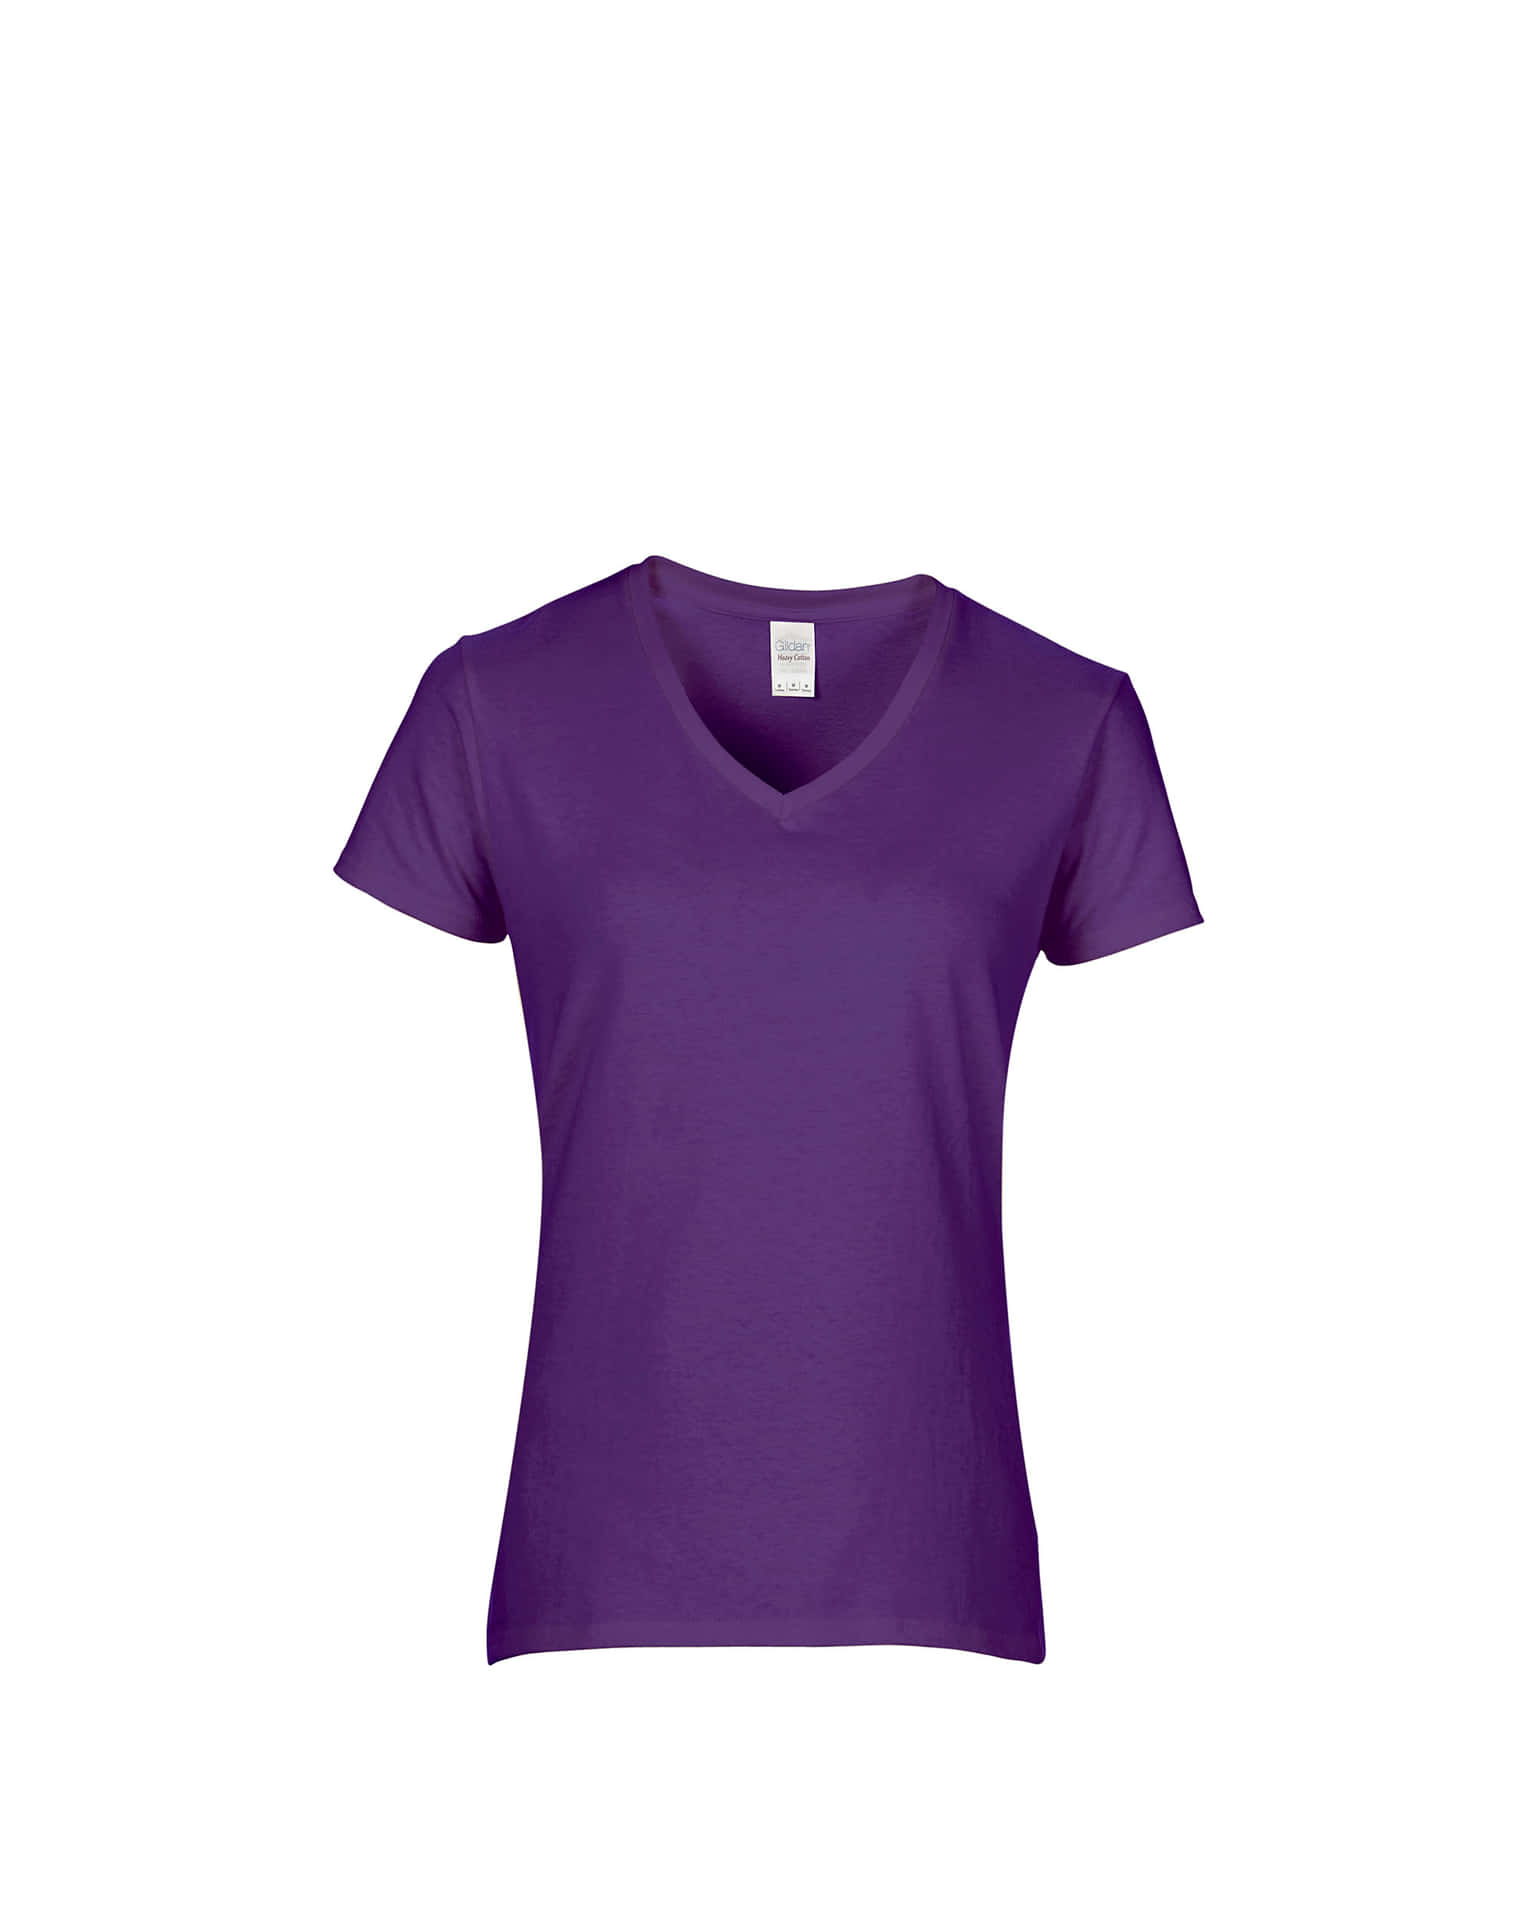 Experience distinct style in this unique Purple Shirt design Wallpaper